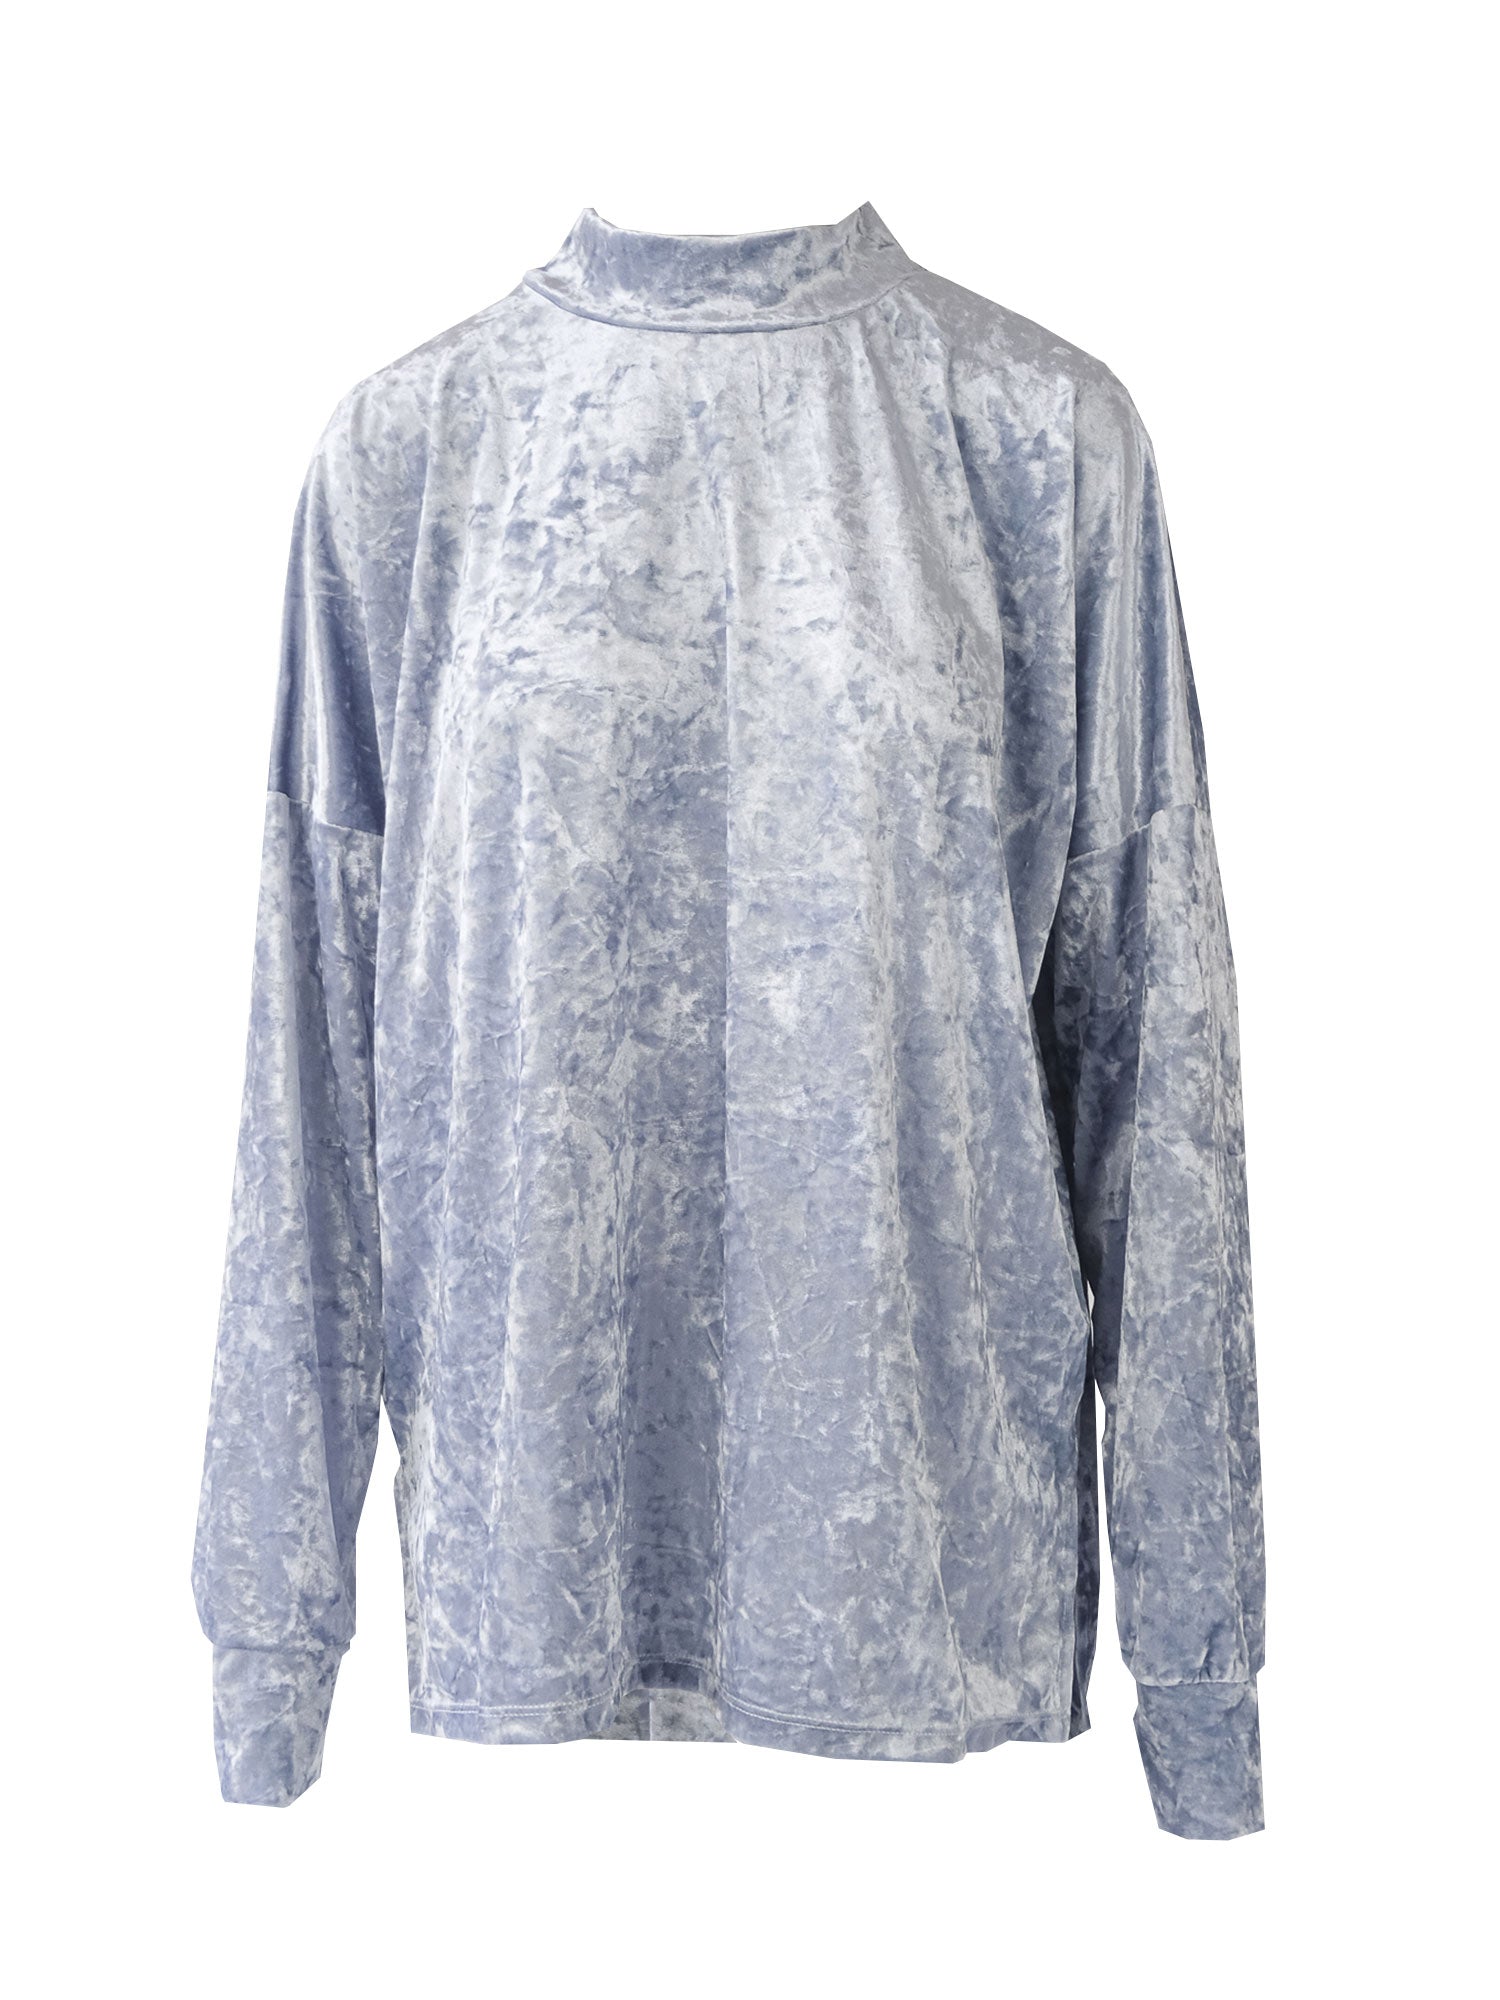 FLORENCE - light blue hammered chenille sweatshirt